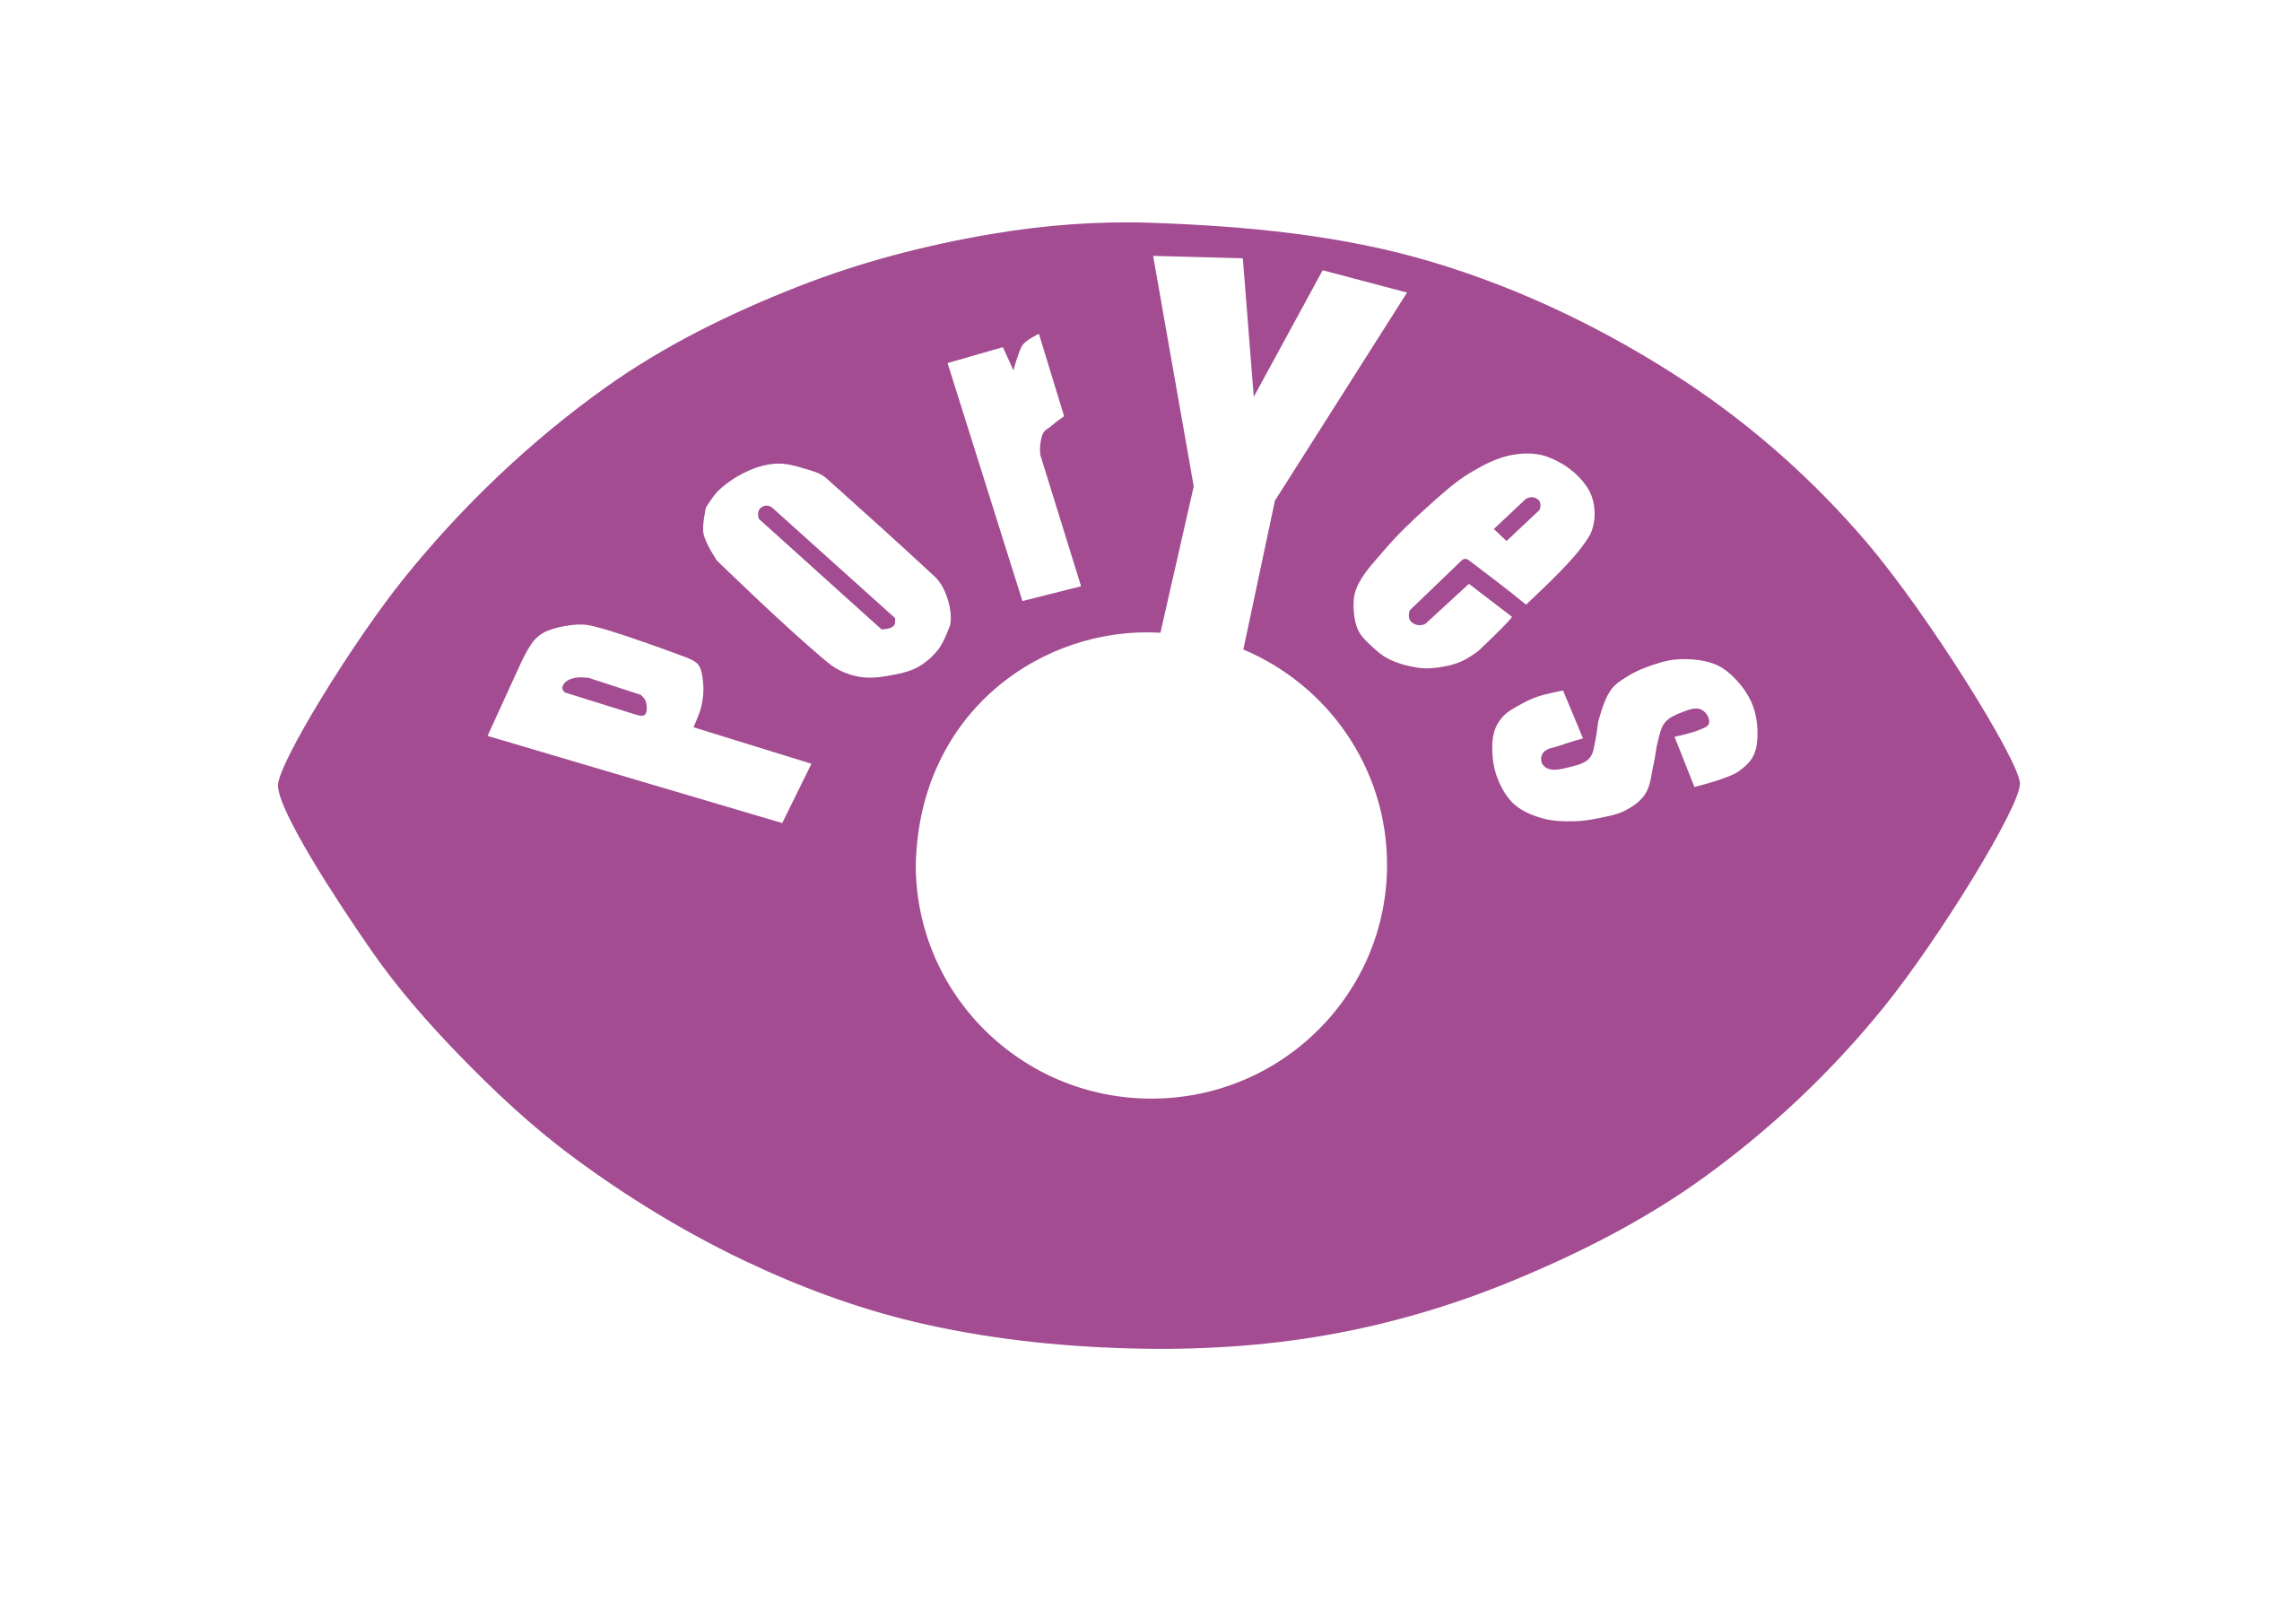 File:PorYes logo Wikipedia.svg - Wikimedia Commons